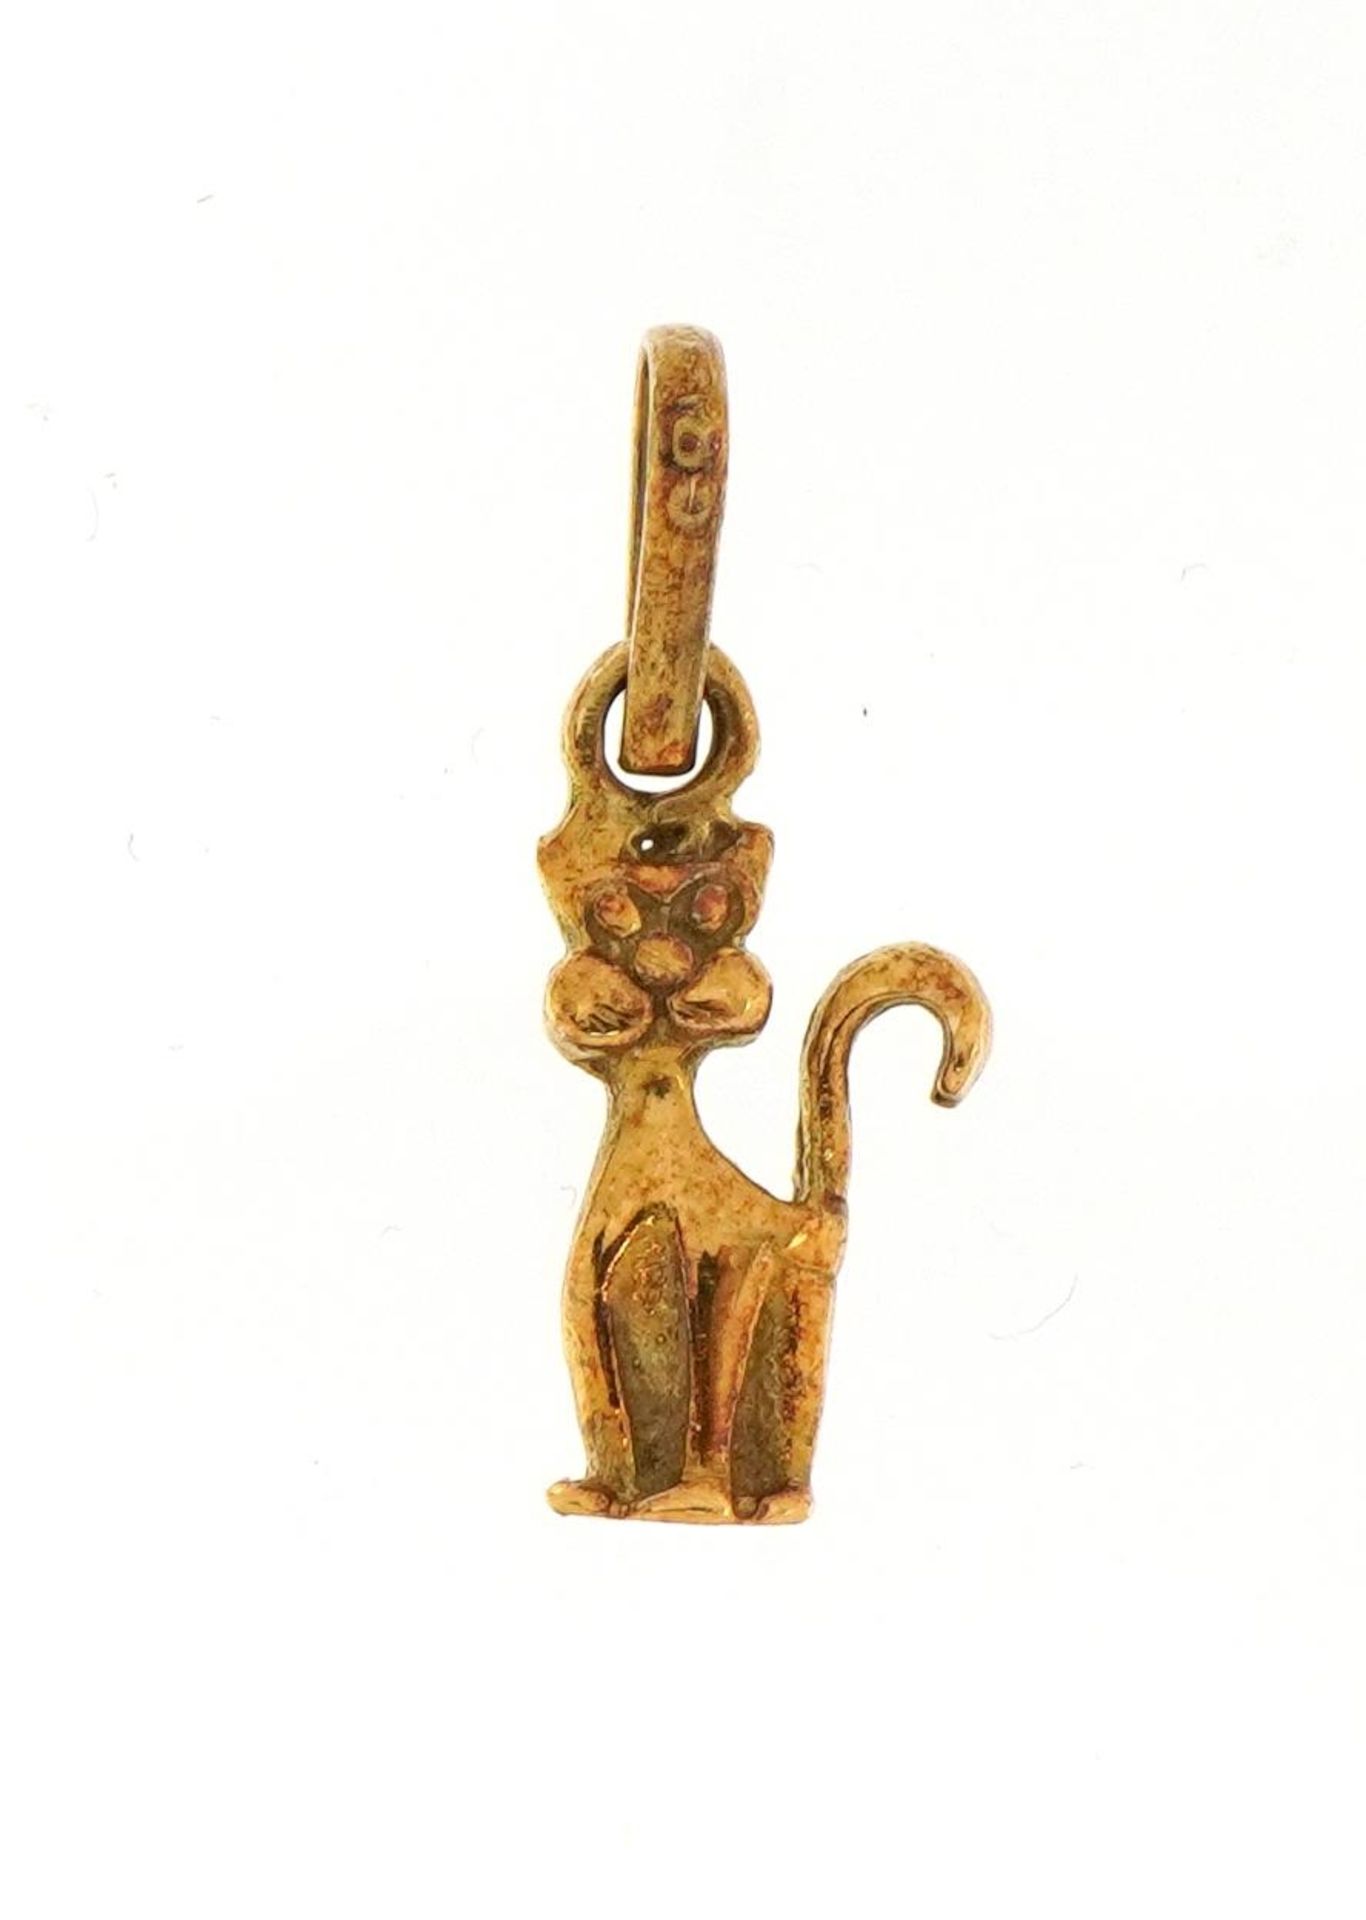 14ct gold cat pendant, 2.2cm high, 1.3g